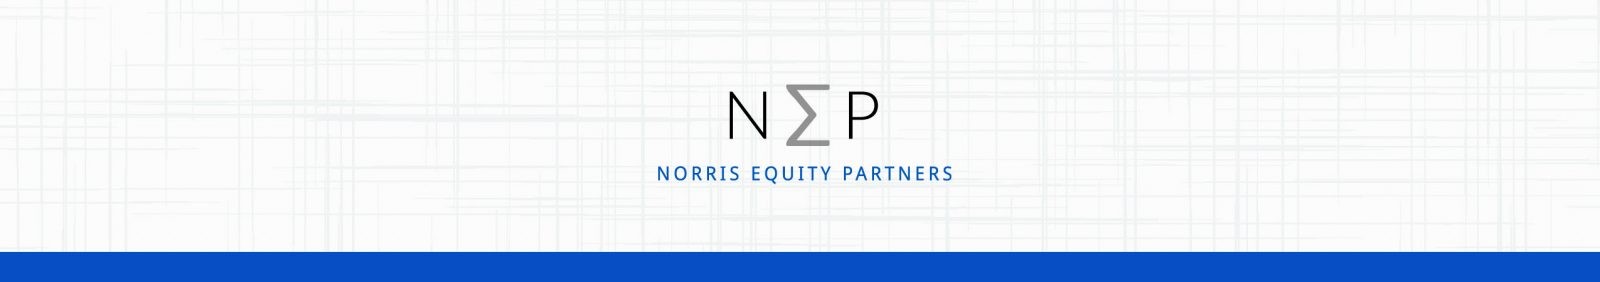 NEP News Release header